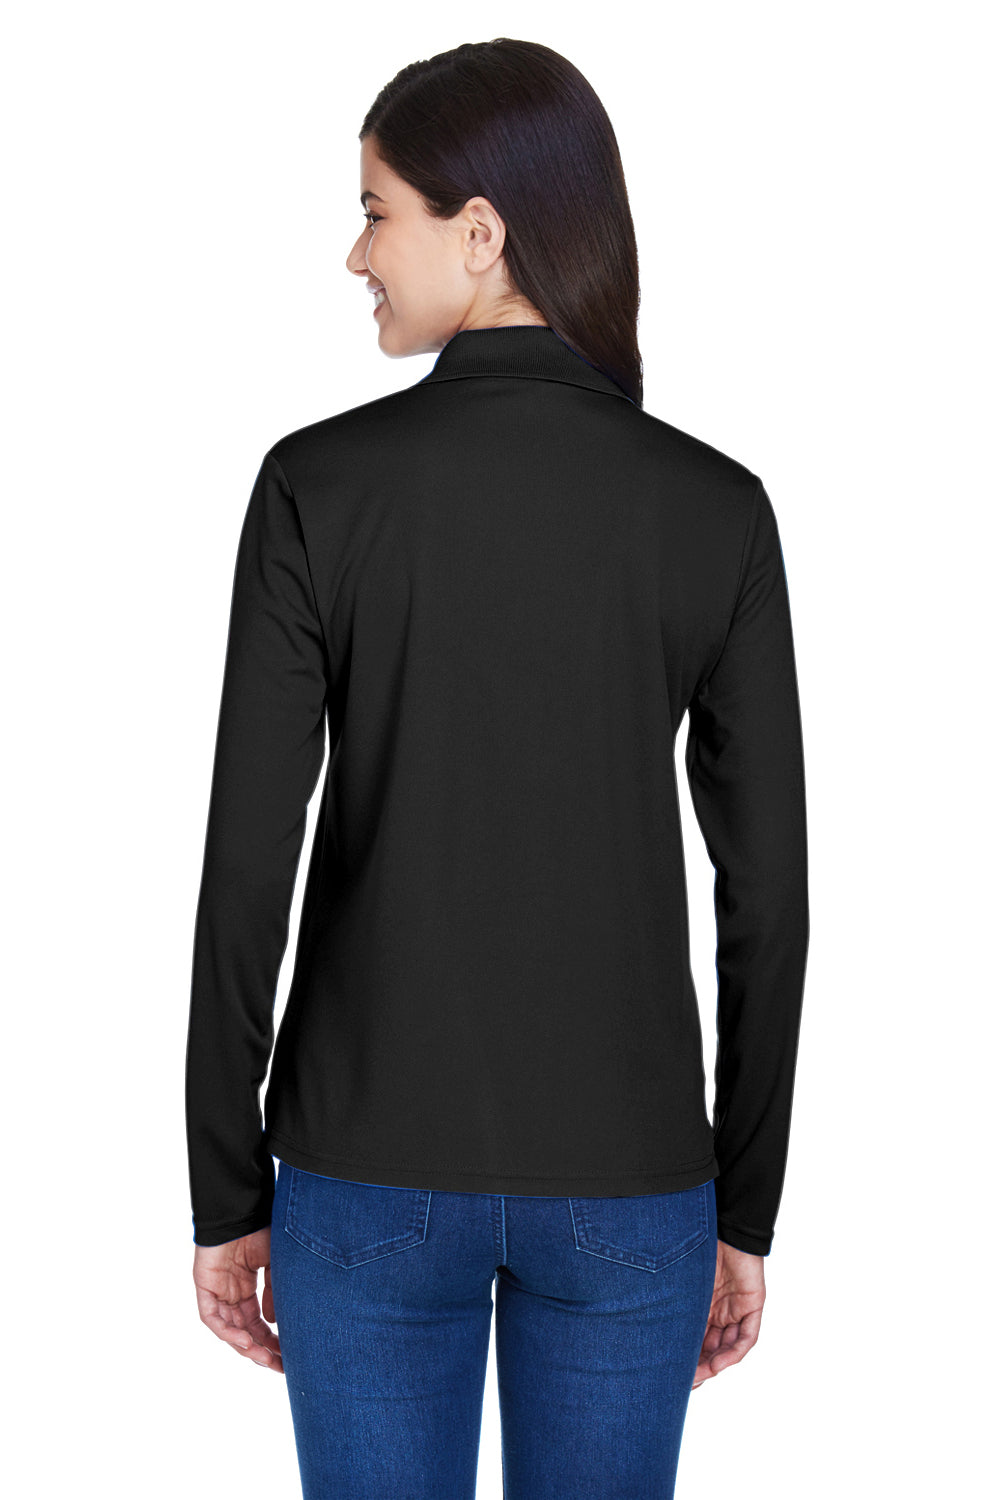 Core 365 78192 Womens Pinnacle Performance Moisture Wicking Long Sleeve Polo Shirt Black Back